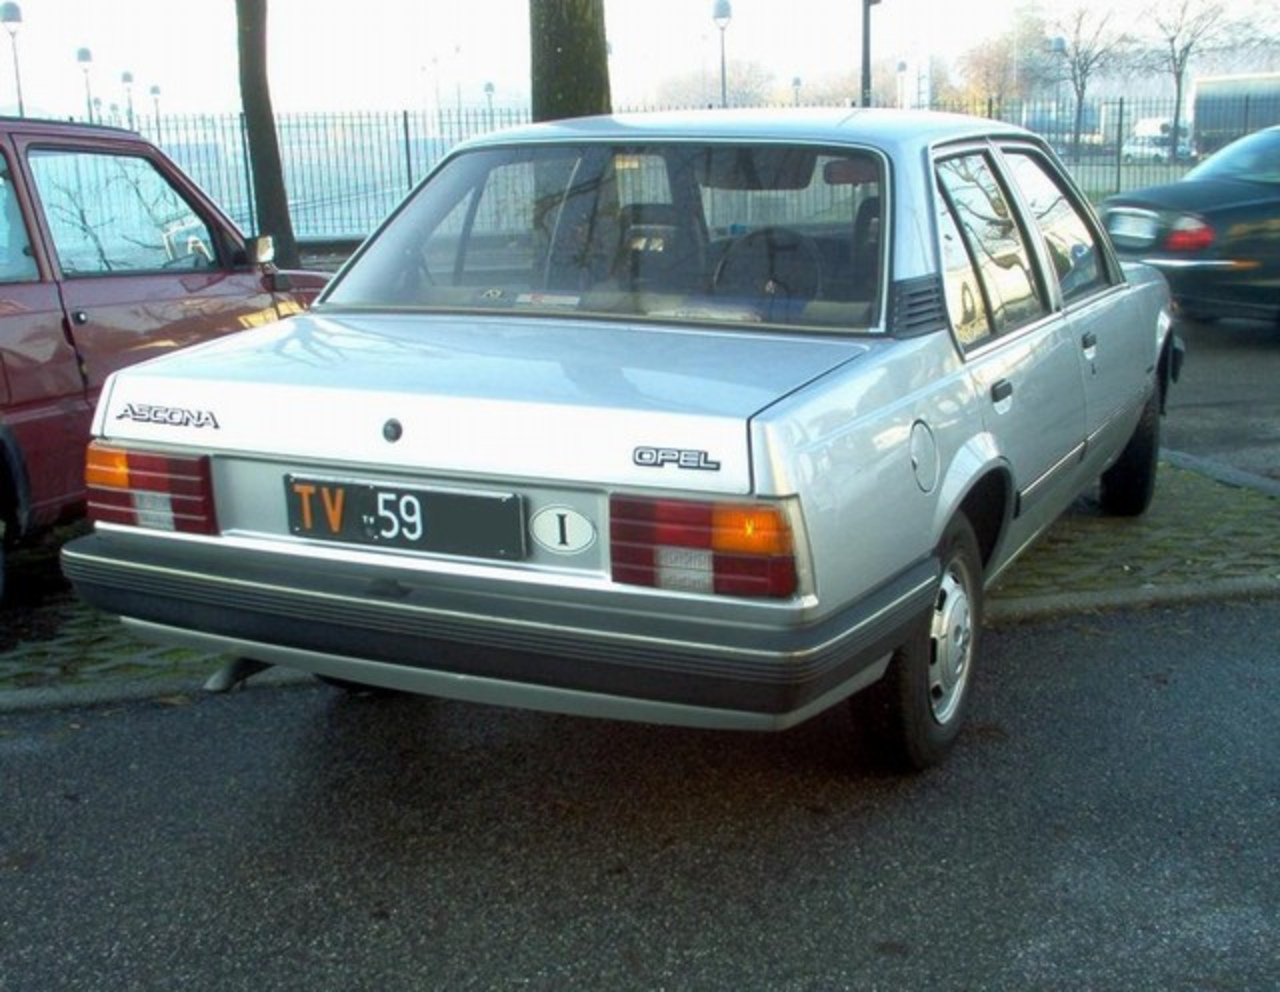 Opel Ascona C 1.3 Luxus - 1984 | Flickr - Photo Sharing!